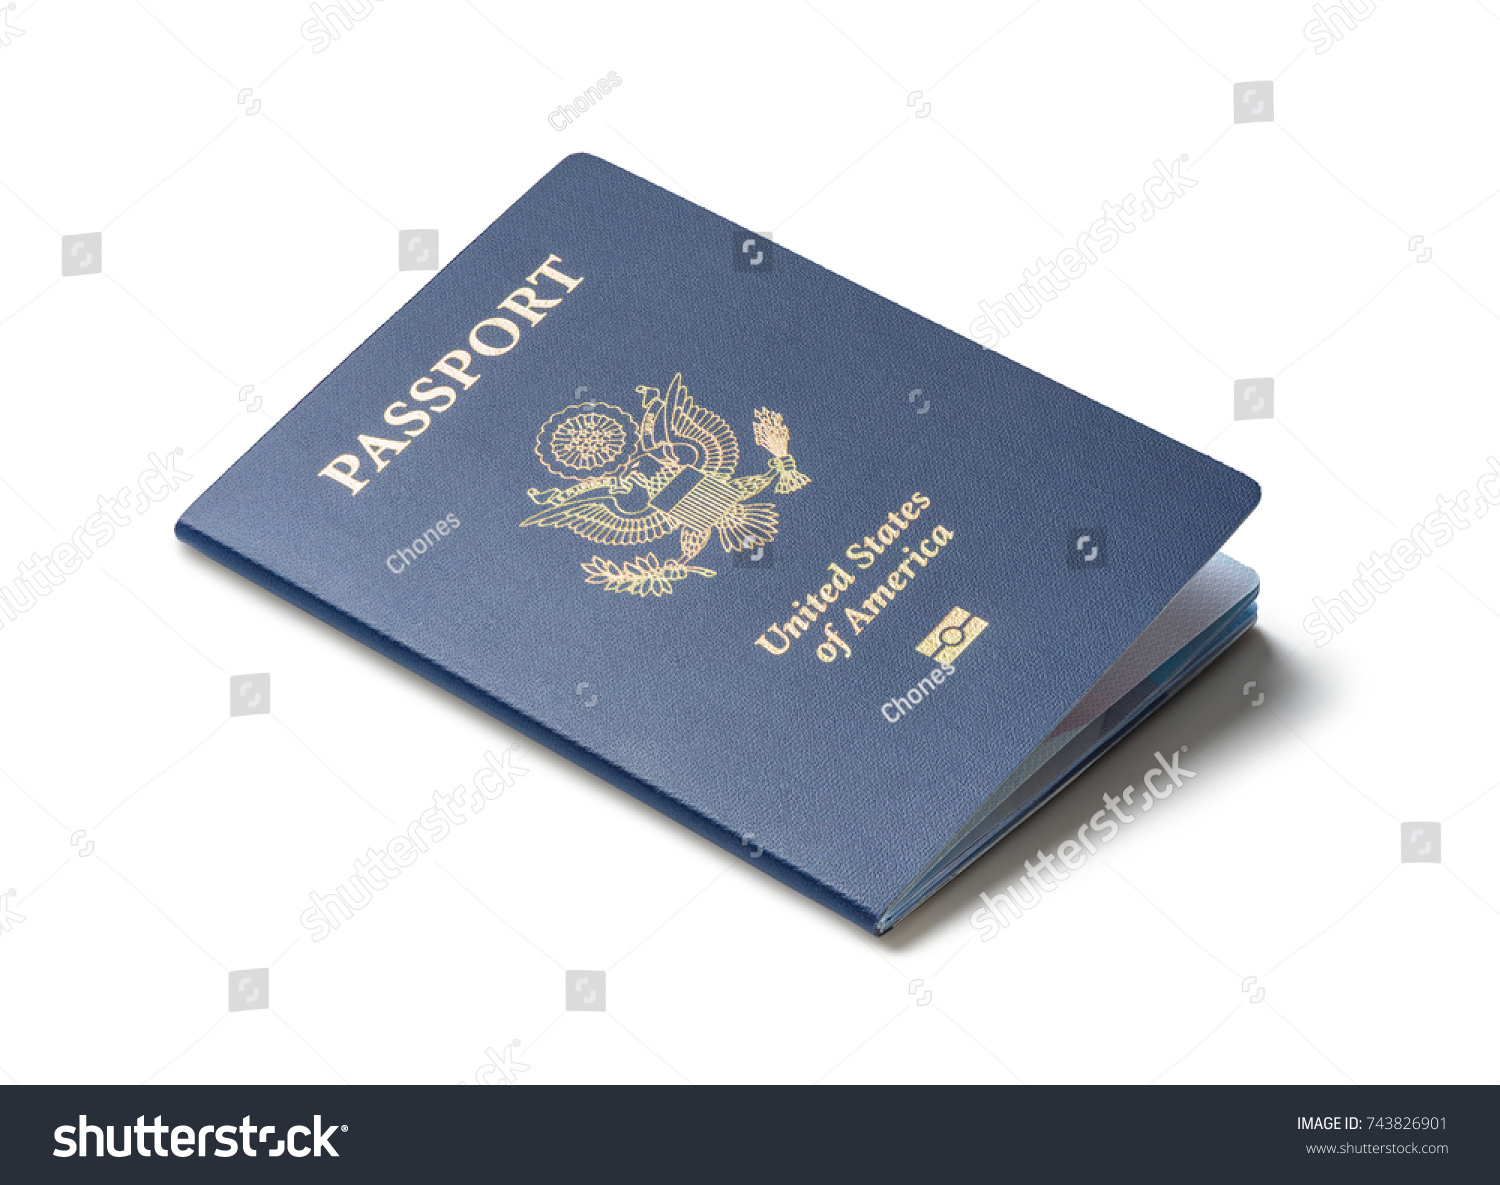 United States of America passport isolated on white background #743826901